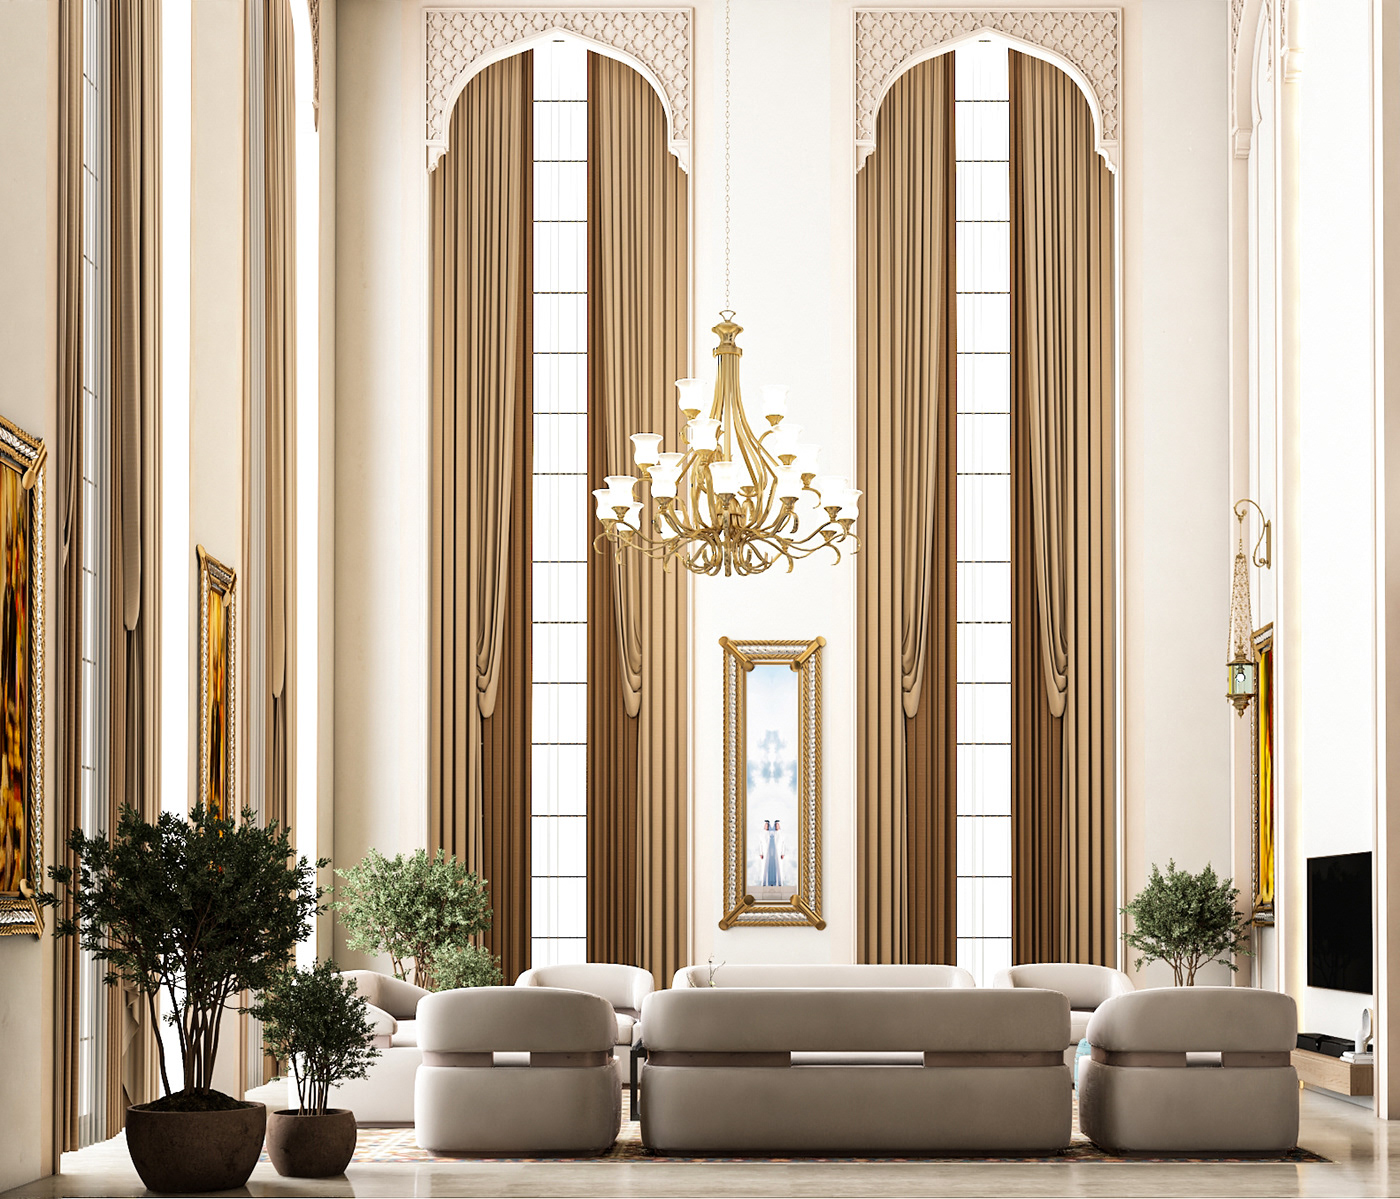 Morocco living room interior design  architecture islamic dining room majlis design entrance design design arabic